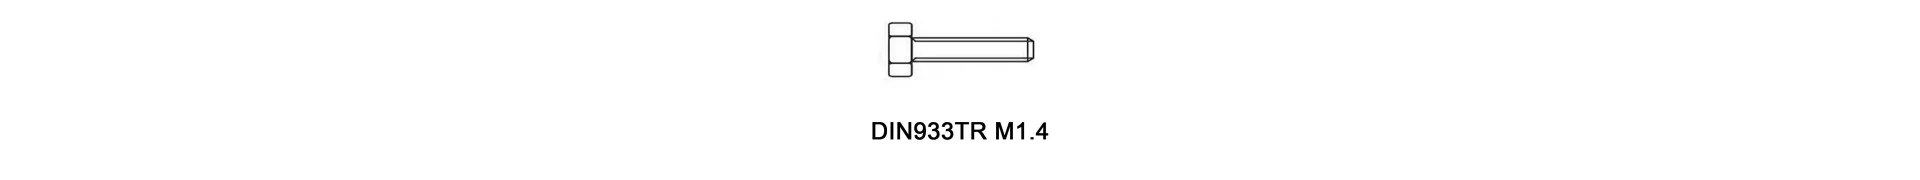 DIN933TR M1.4